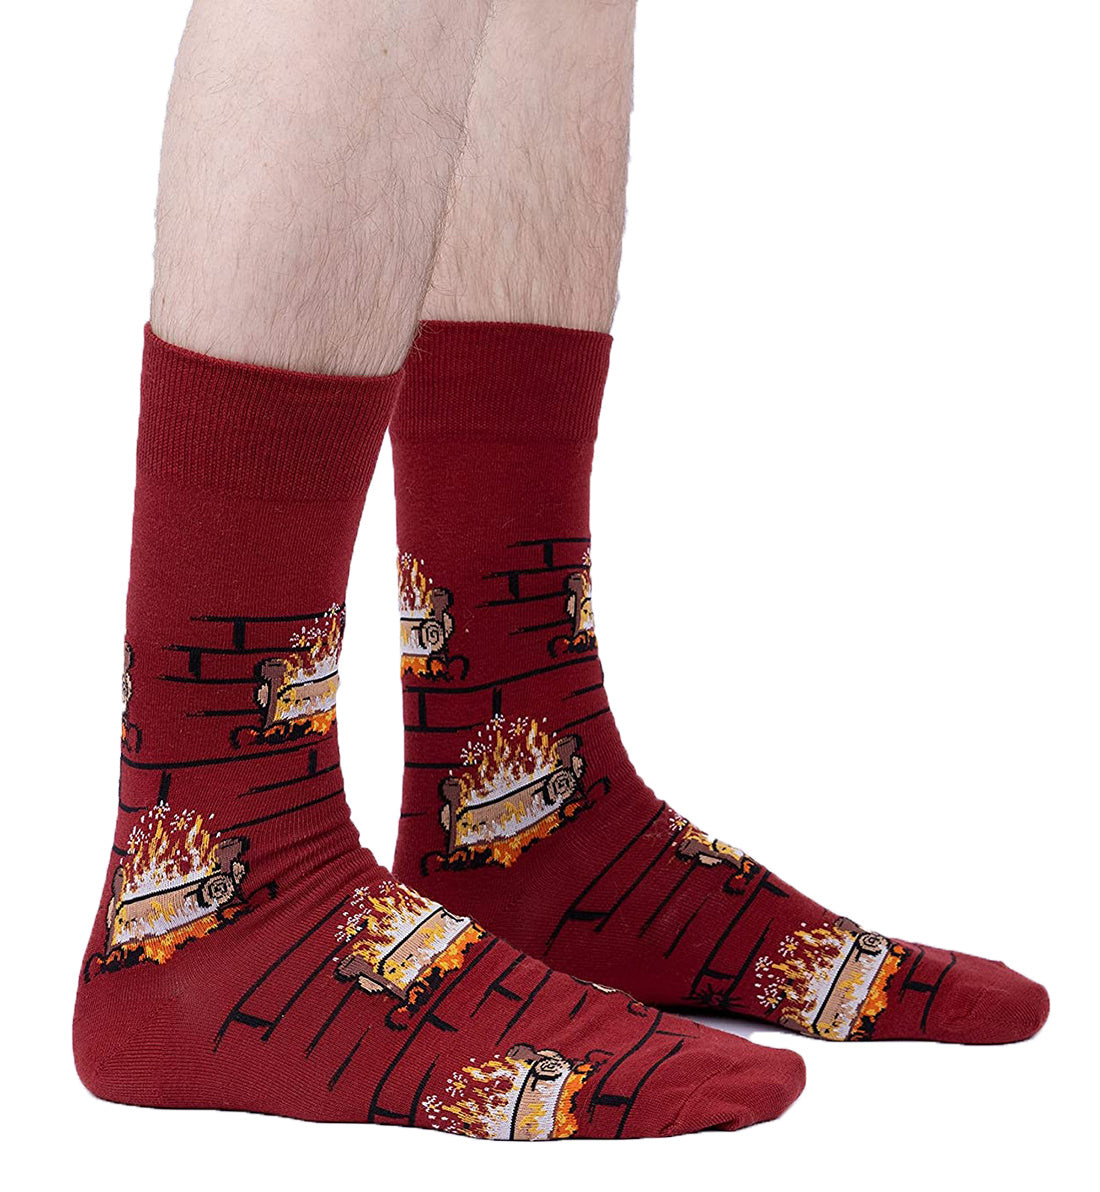 SOCK it to me Men's Crew Socks (MEF0588),Yule Log - Yule Log,One Size